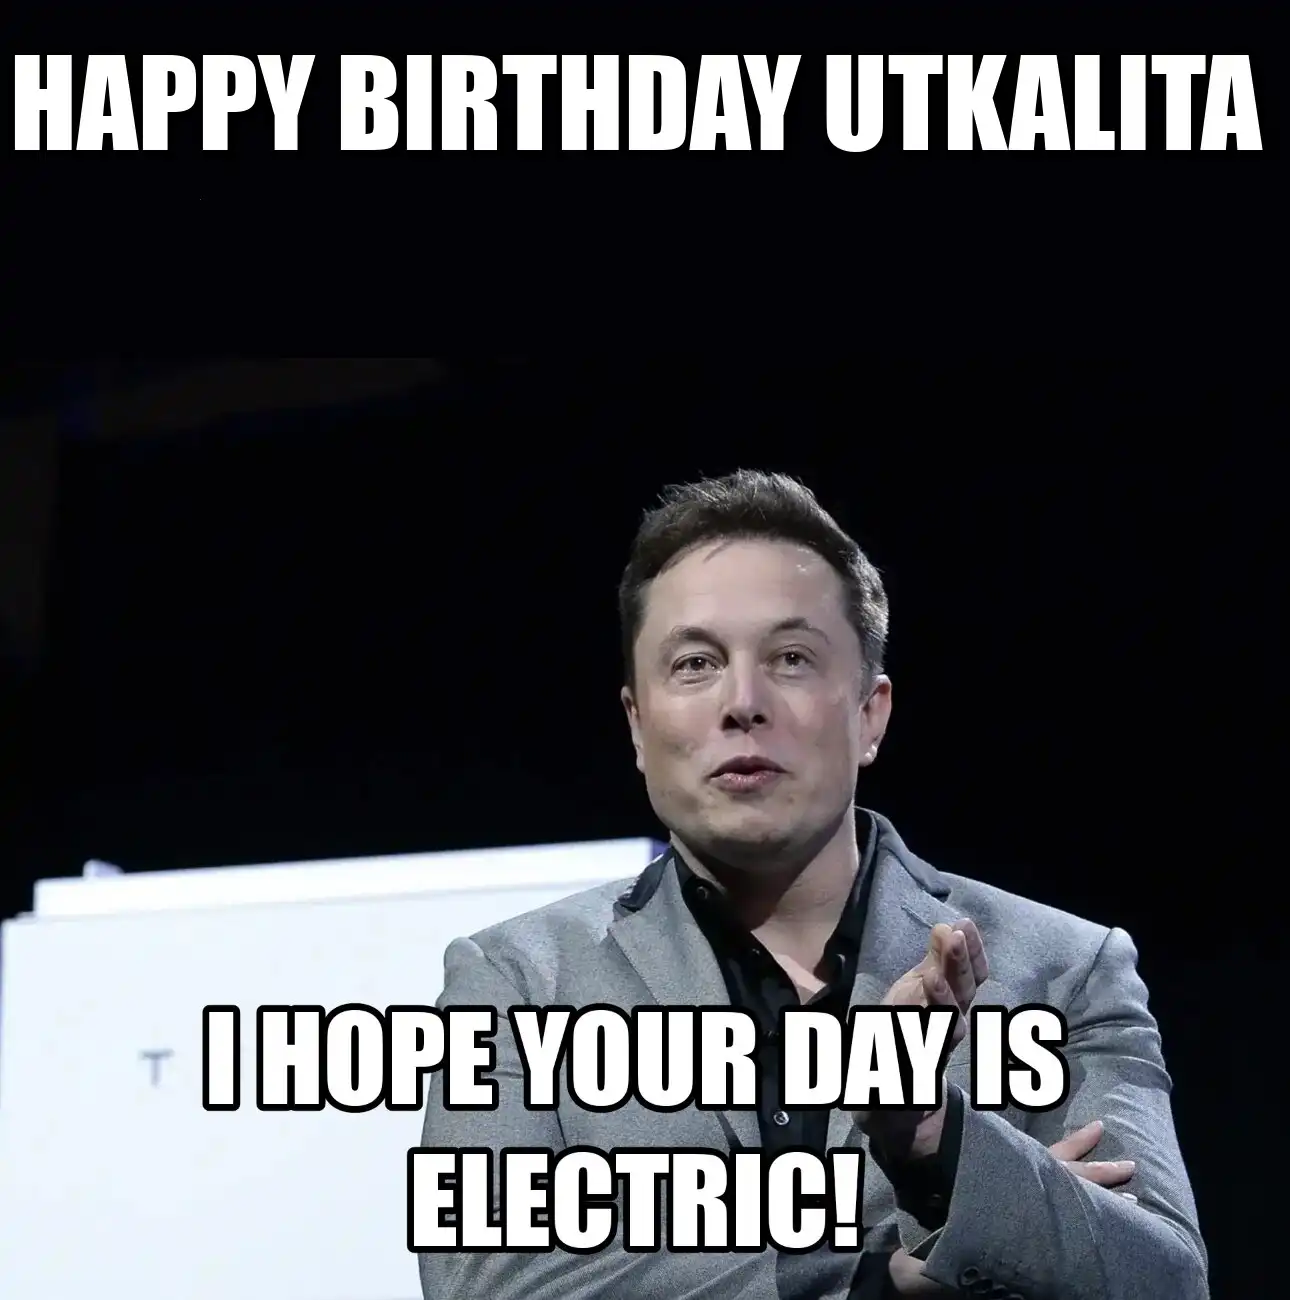 Happy Birthday Utkalita I Hope Your Day Is Electric Meme